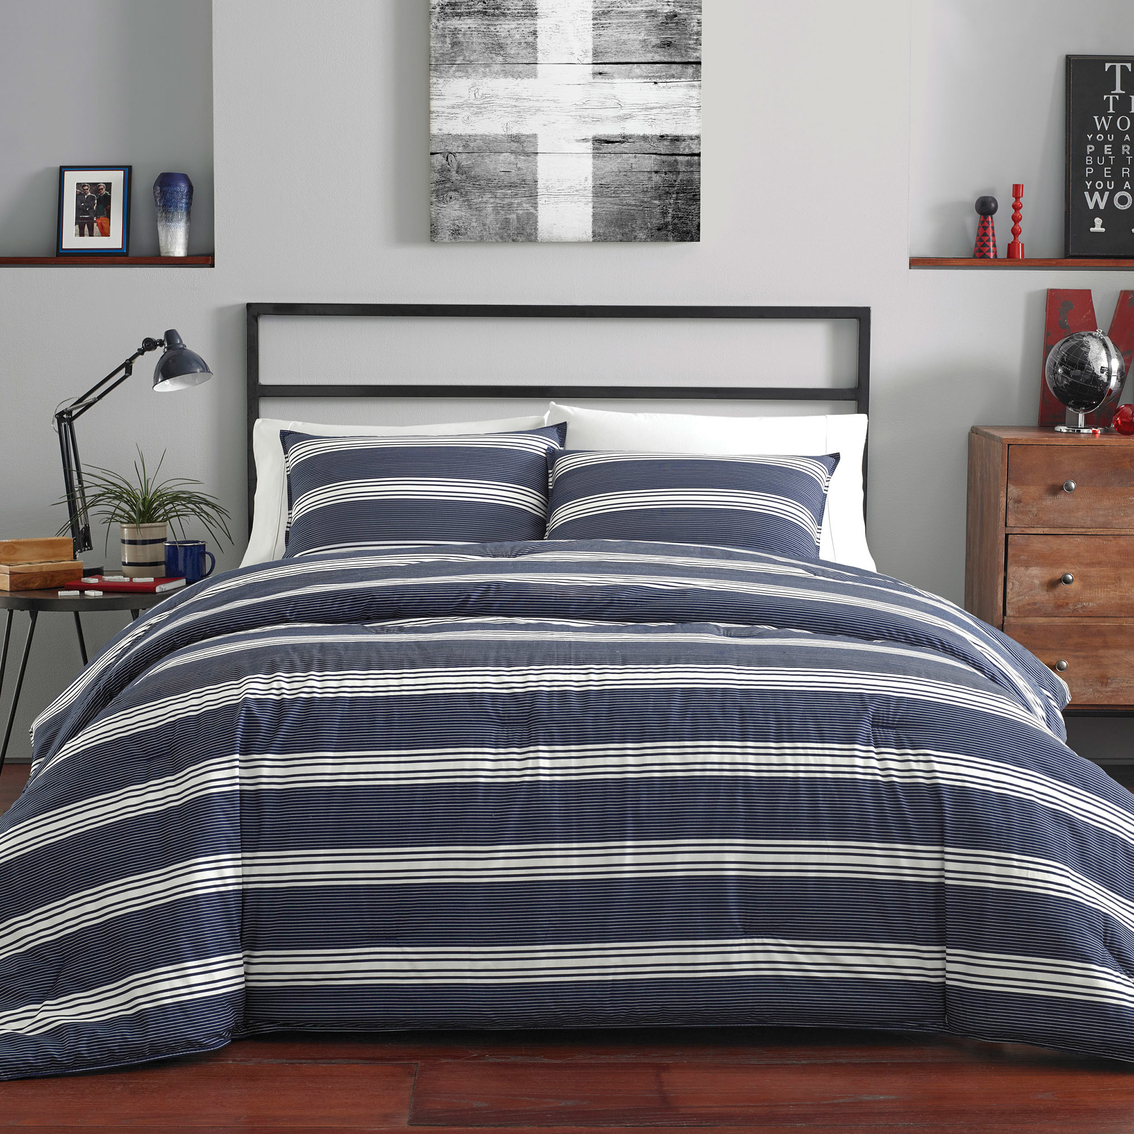 Nautica Craver Comforter And Pillow Sham Set, Bedding Sets, Household